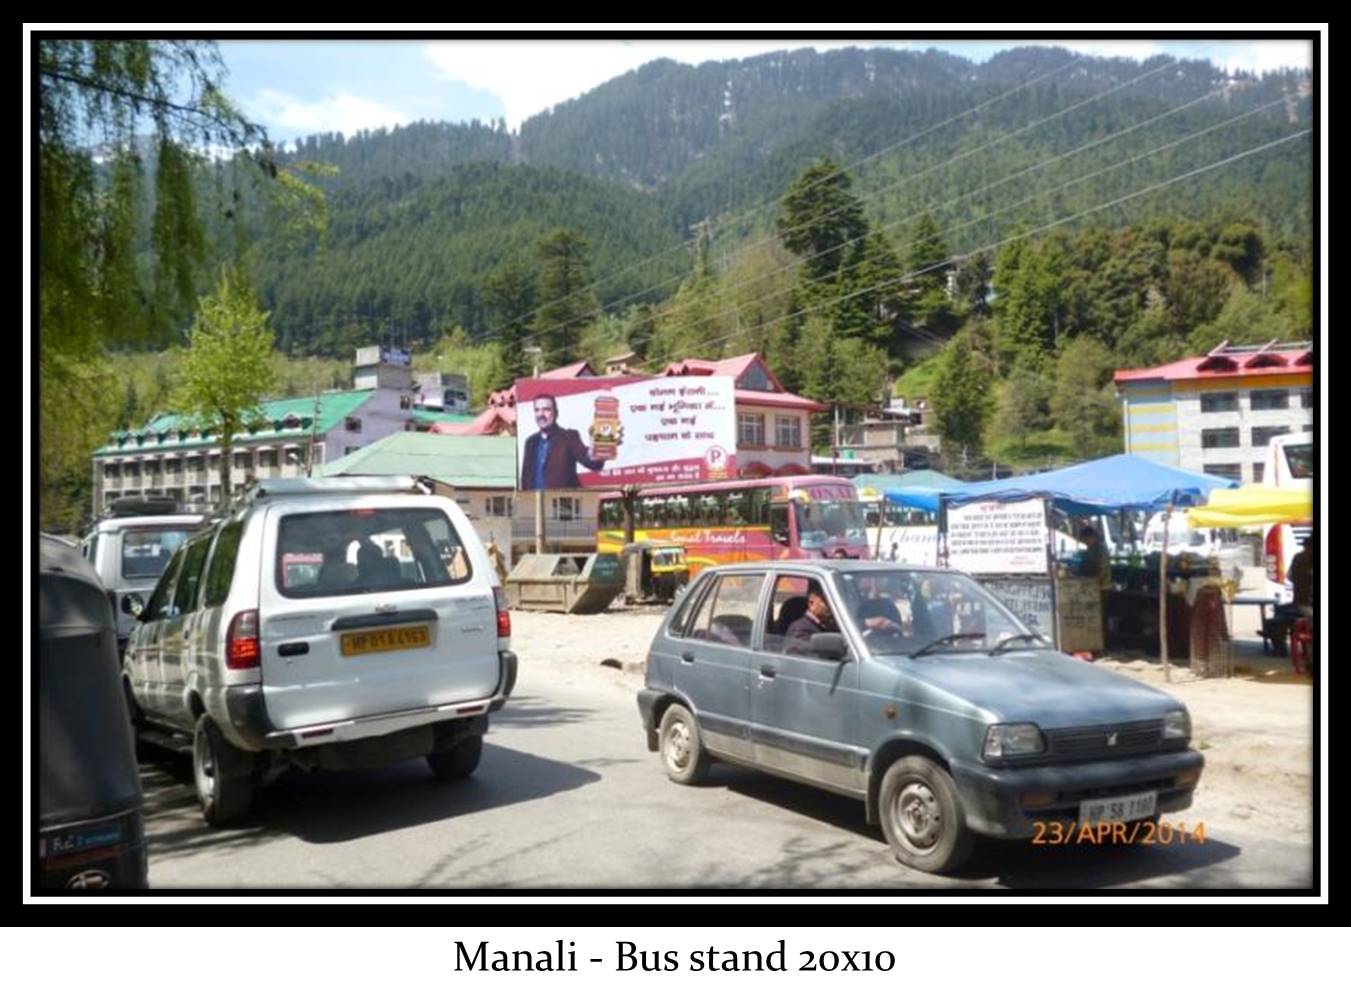 Bus stand, Manali